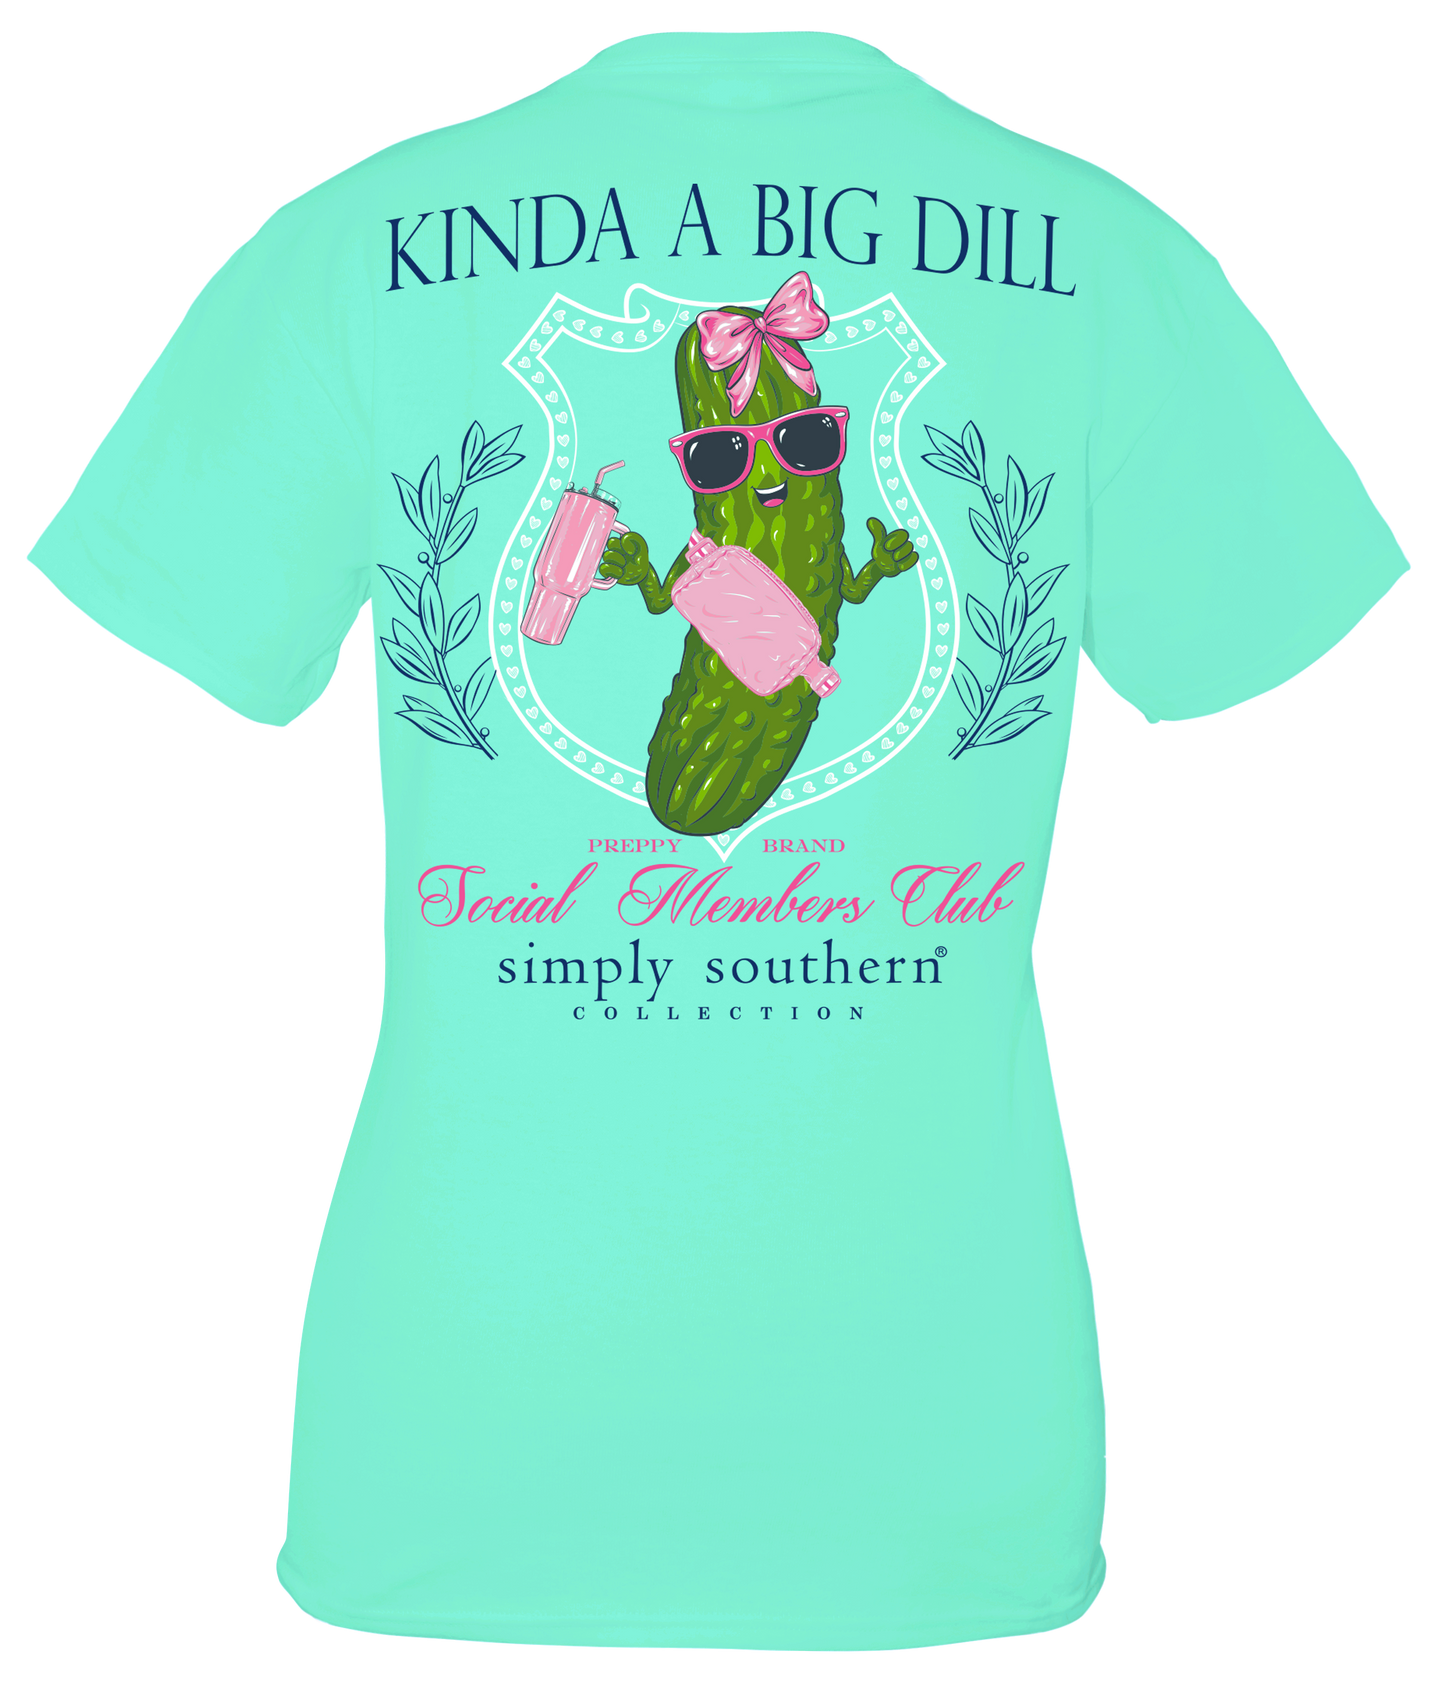 "Kinda A Big Dill" Shirt